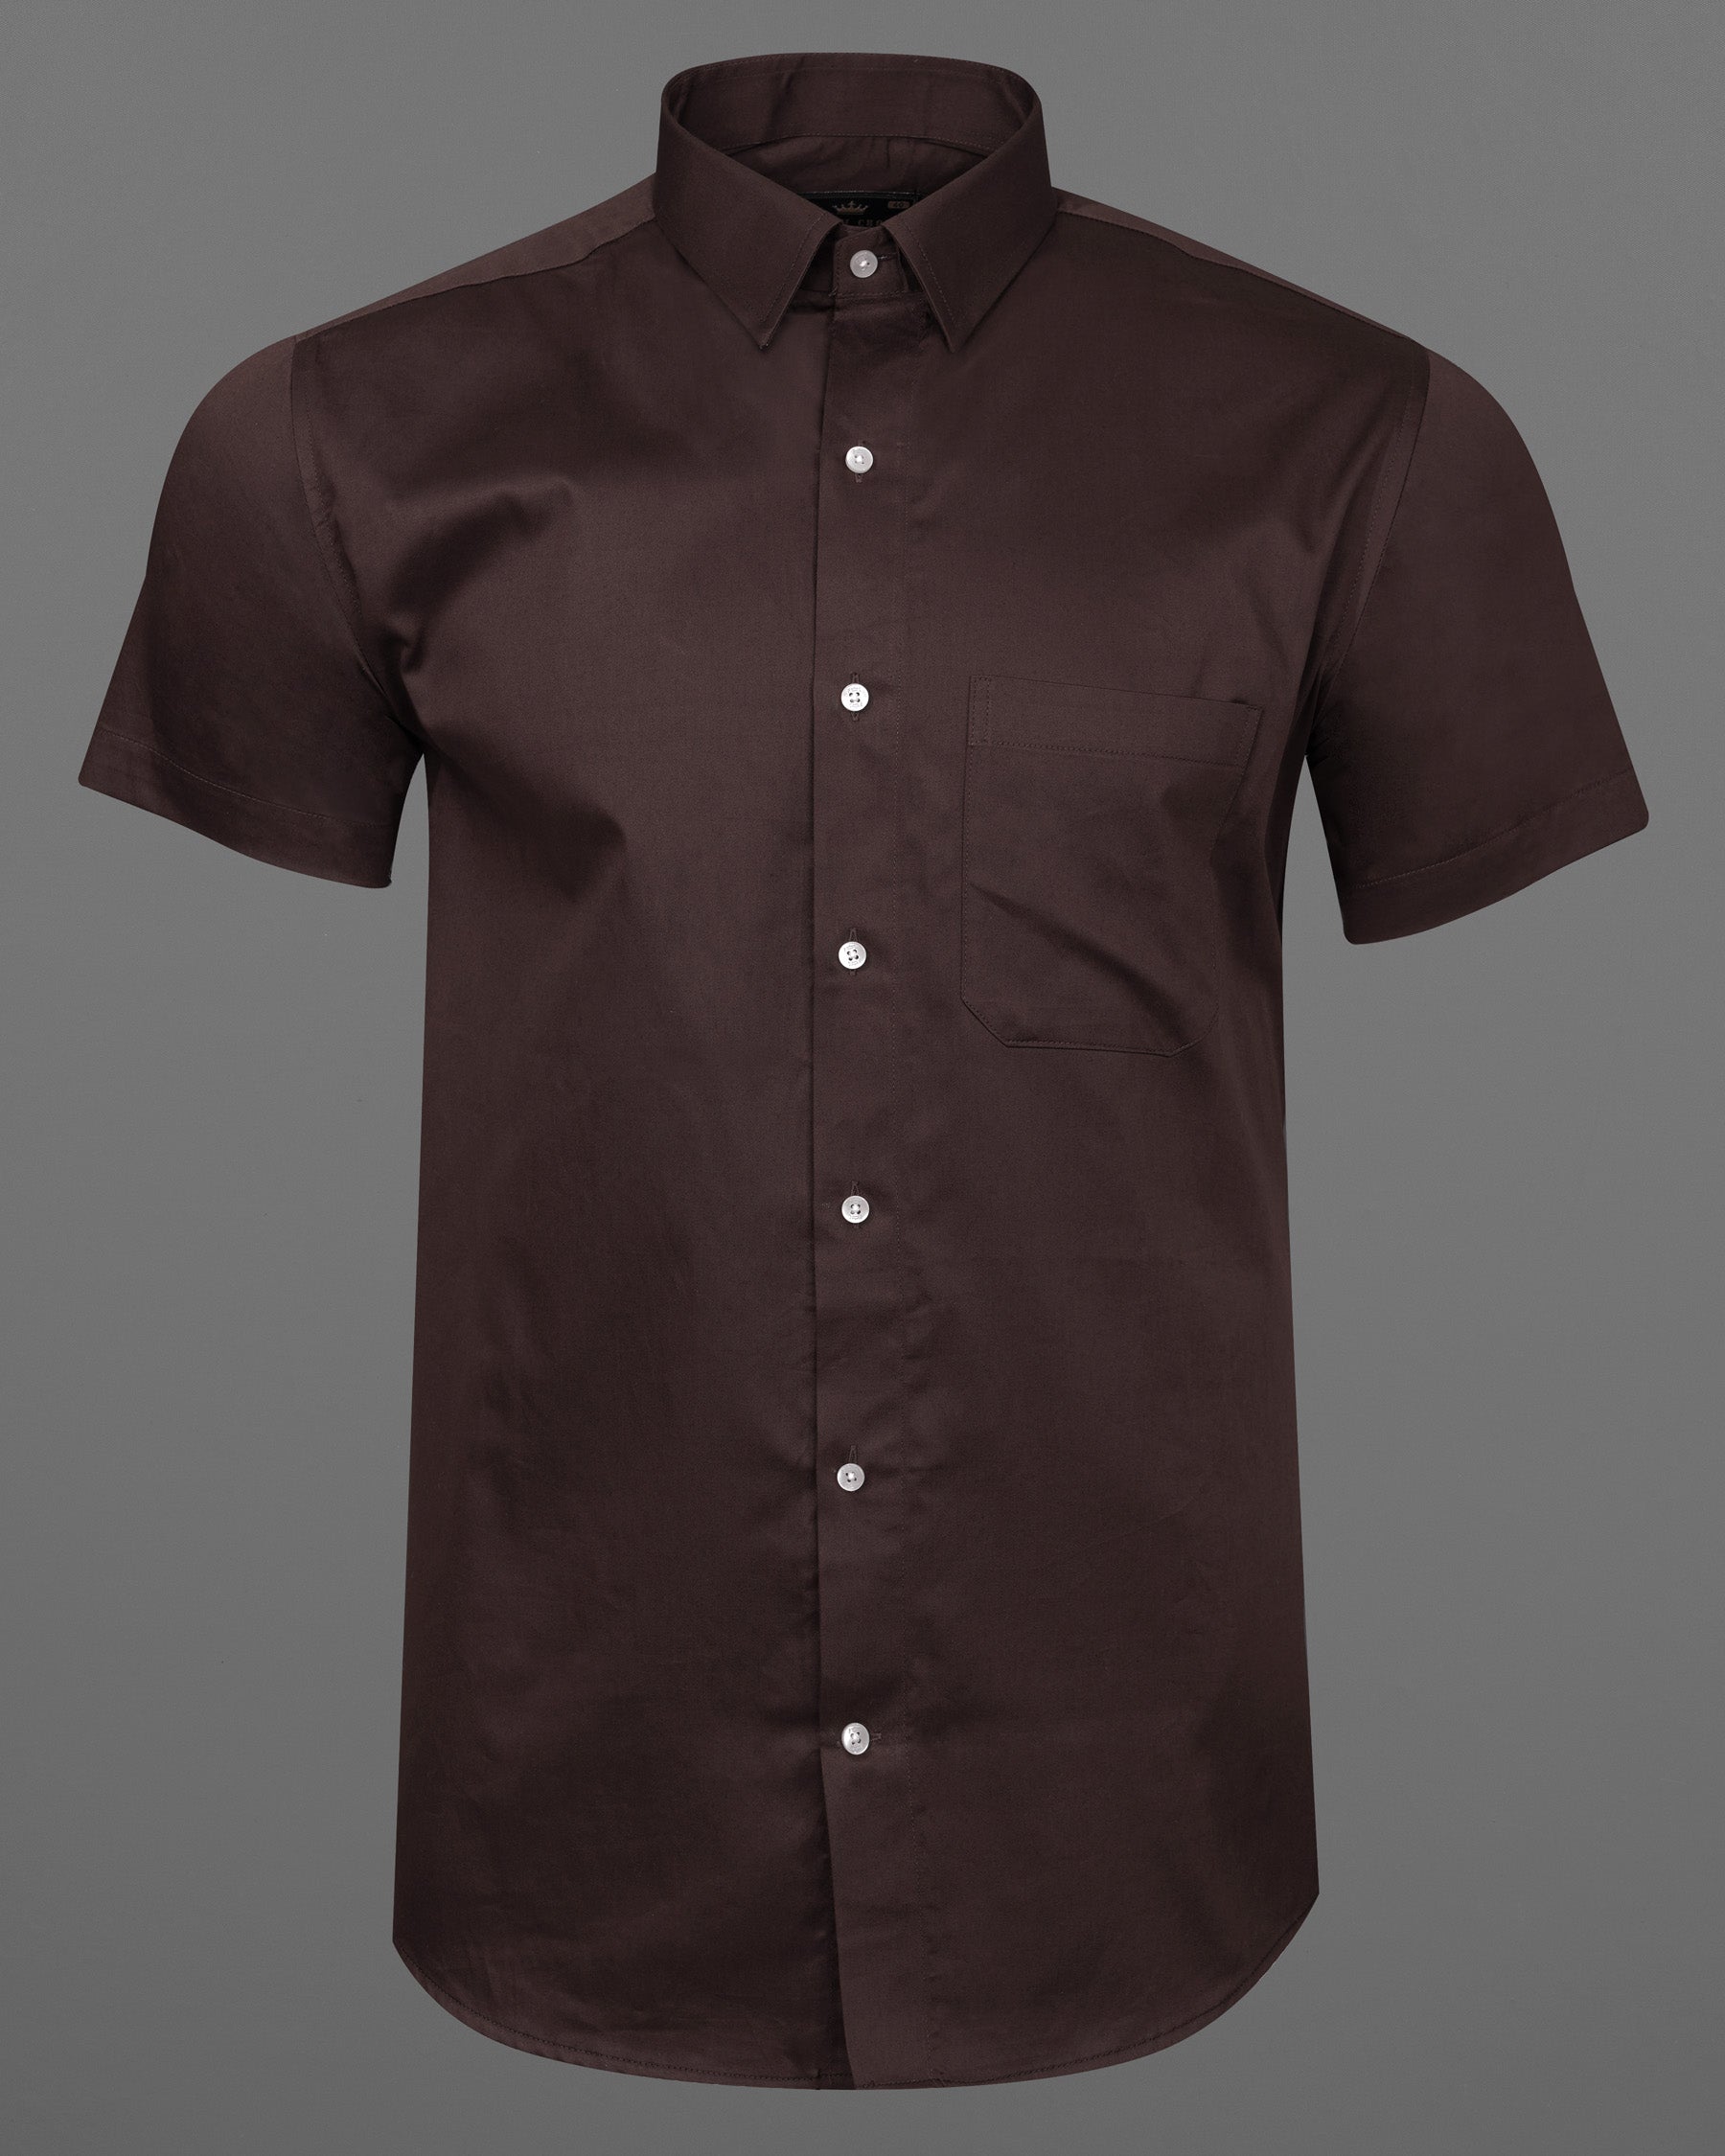 Eclipse Brown Super Soft Premium Cotton Shirt 7780-H-38, 7780-H-39, 7780-H-40, 7780-H-42, 7780-H-44, 7780-H-46, 7780-H-48, 7780-H-50, 7780-H-52